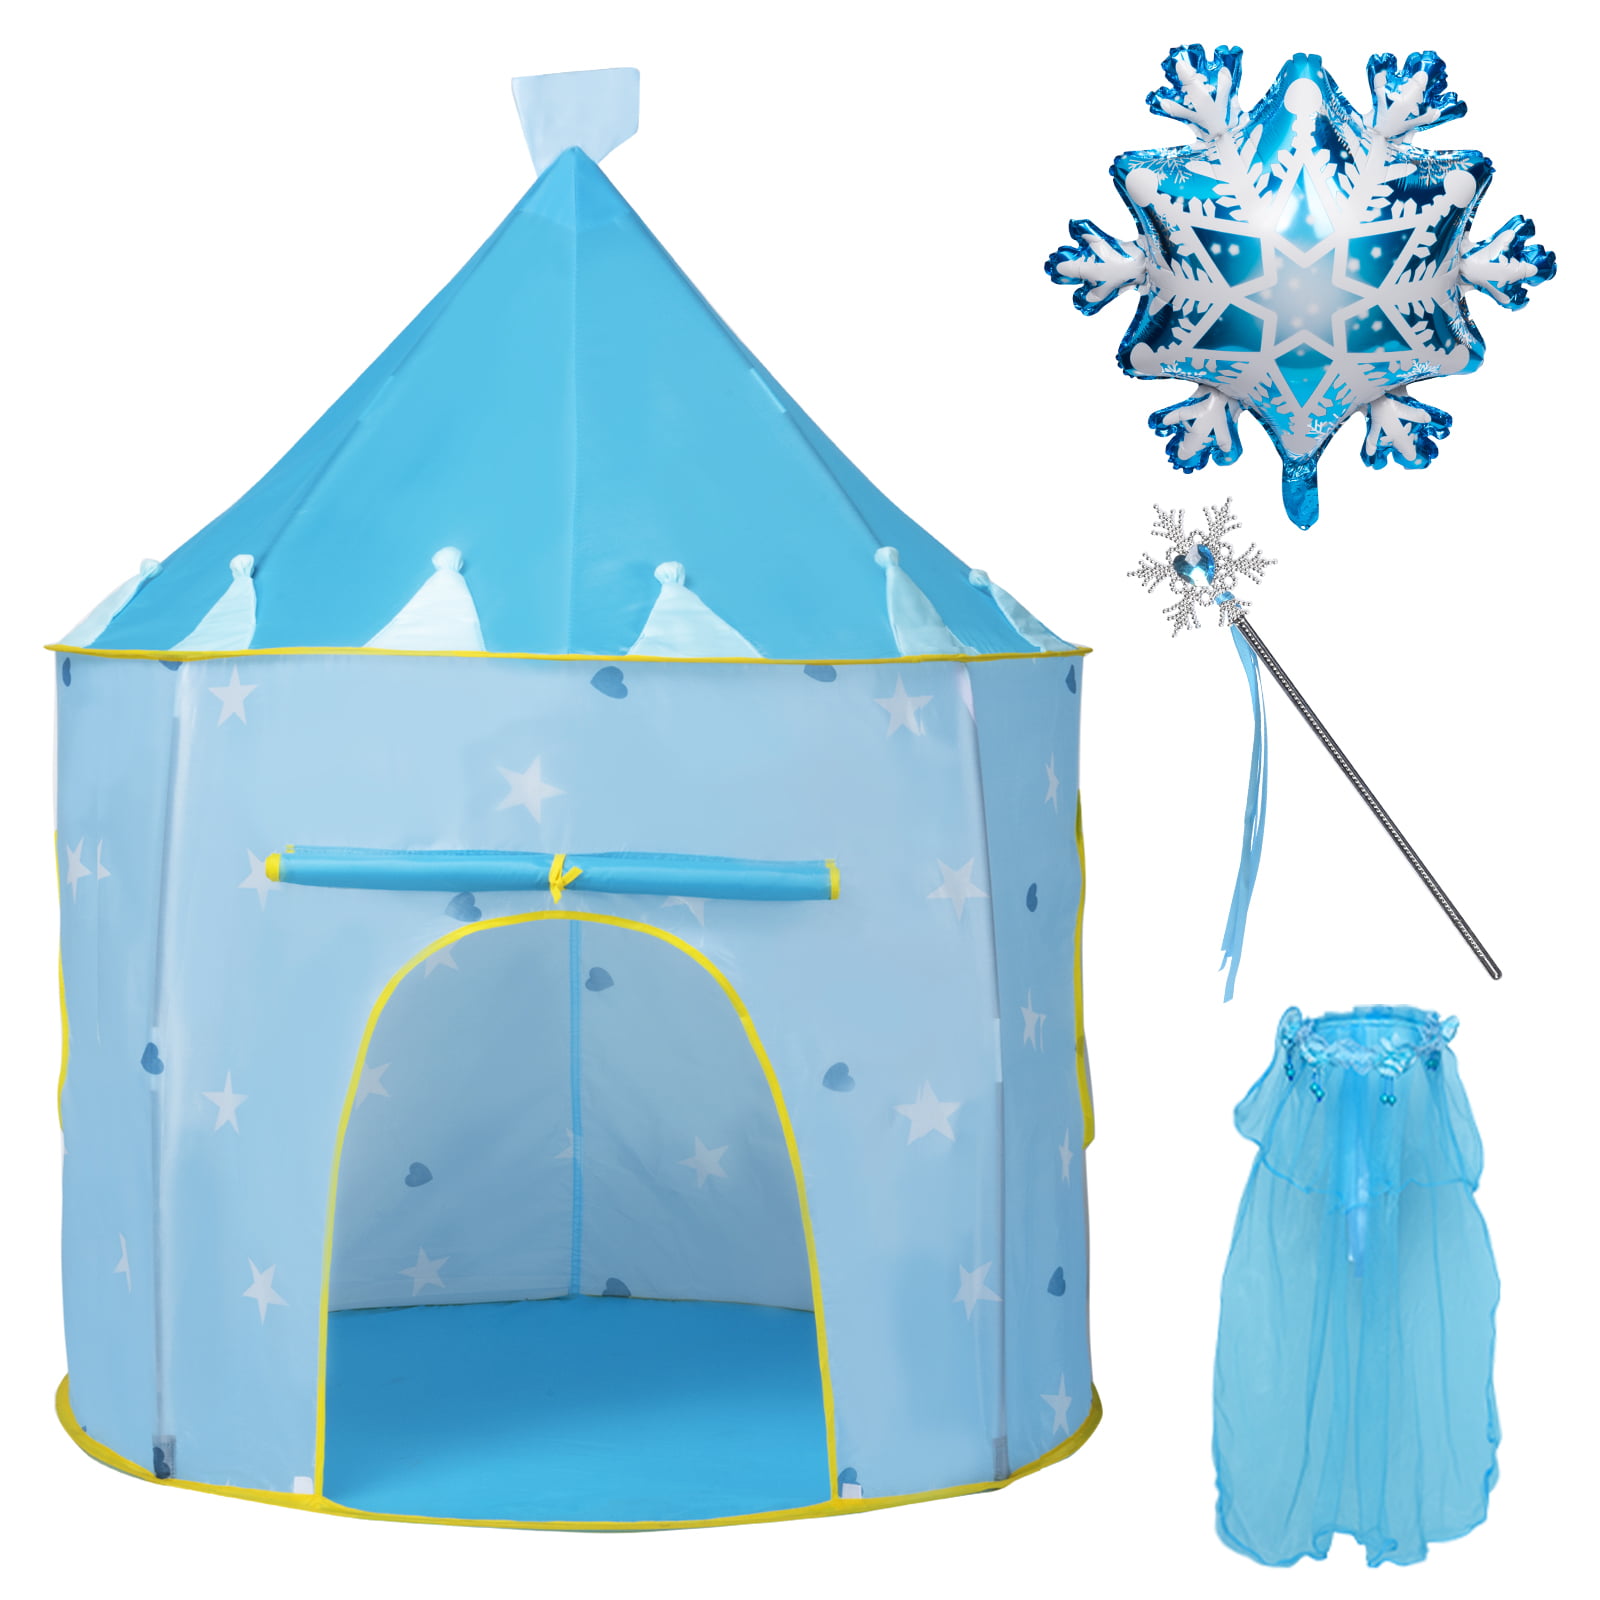 Folding Blue Star Pop Up Playhouse Castle Play Tent for Kids Garden Fun Toy 